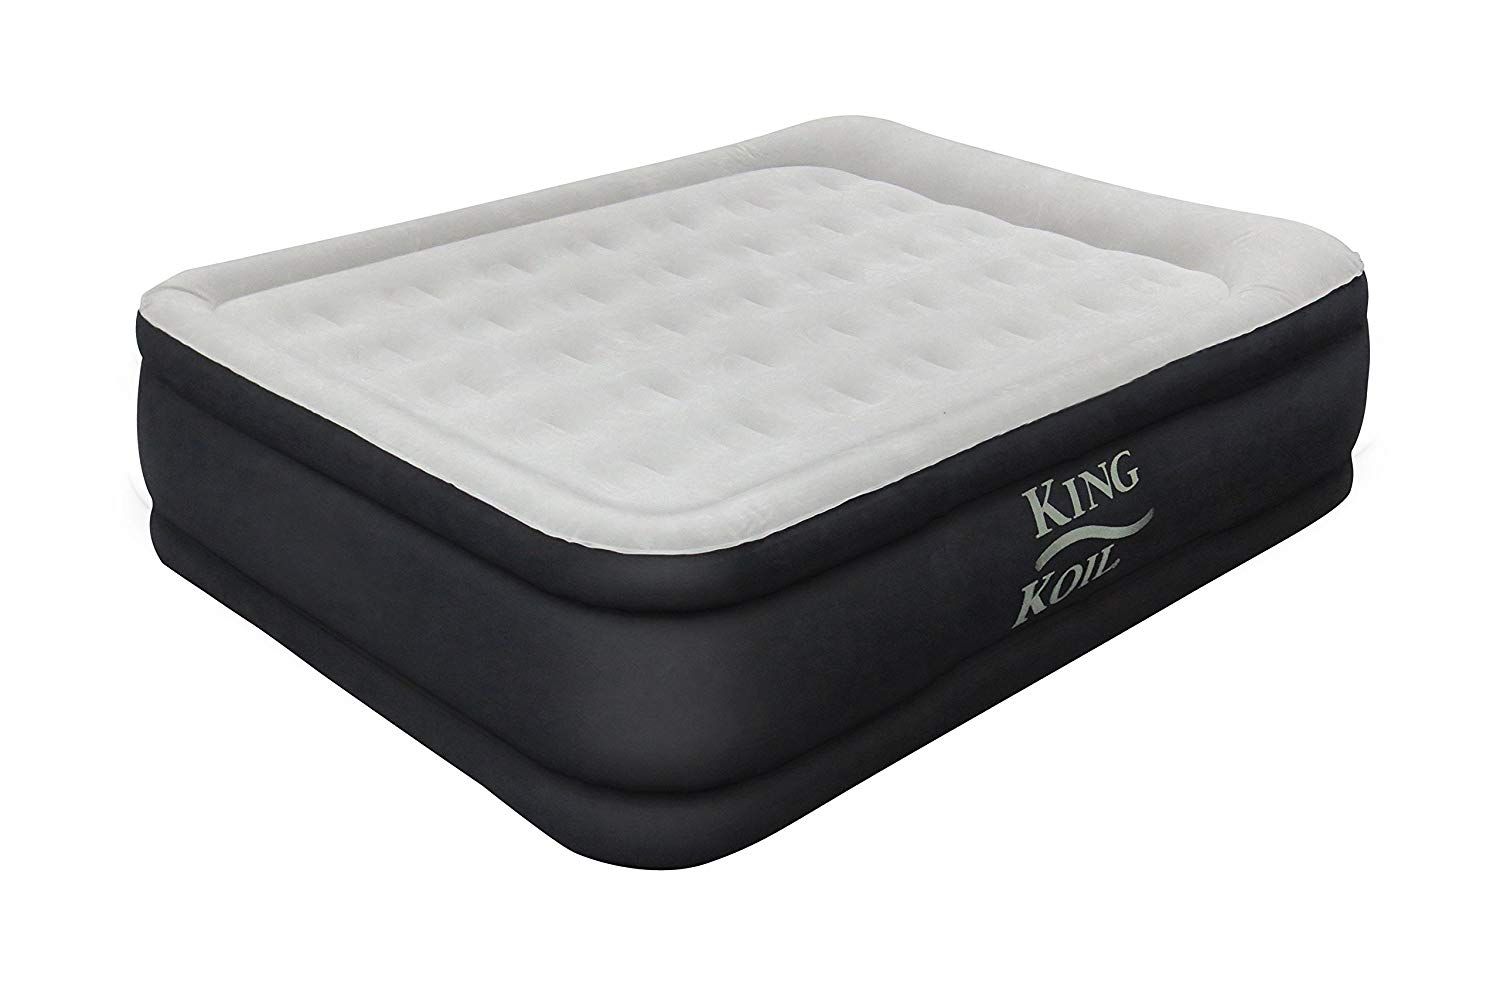 king koil air mattress troubleshooting